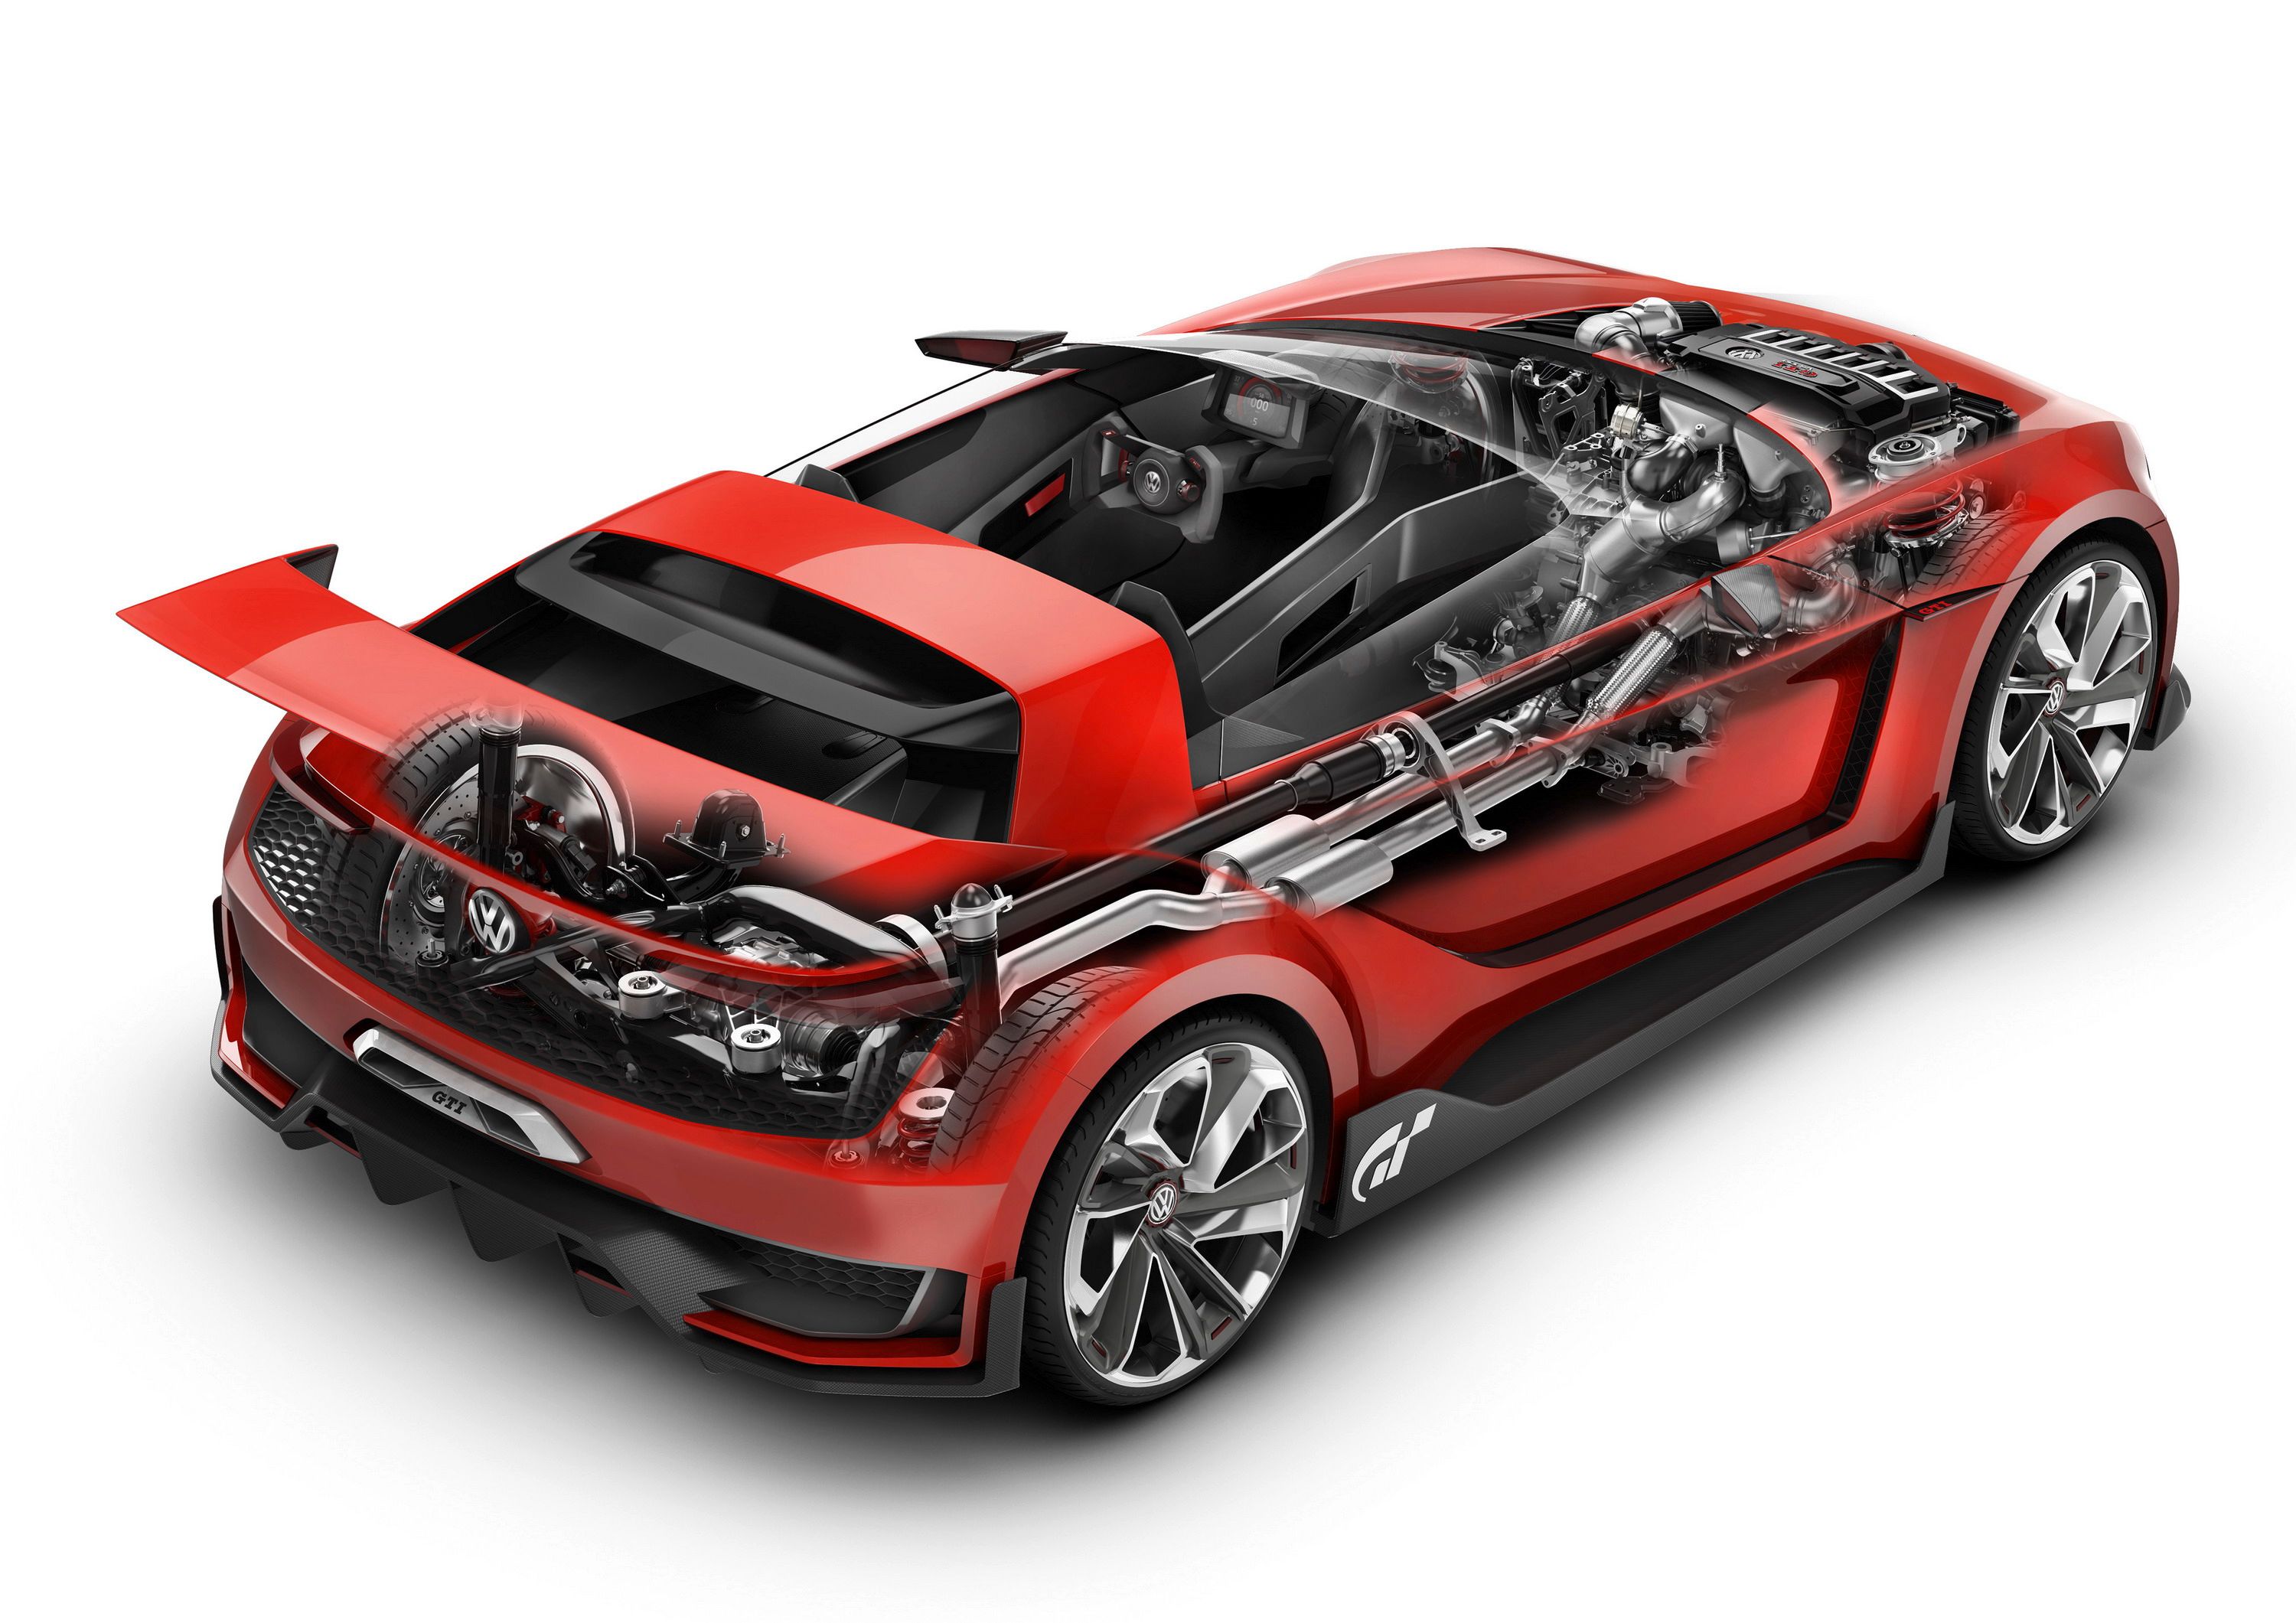 2014 Volkswagen Vision Gran Turismo Concept